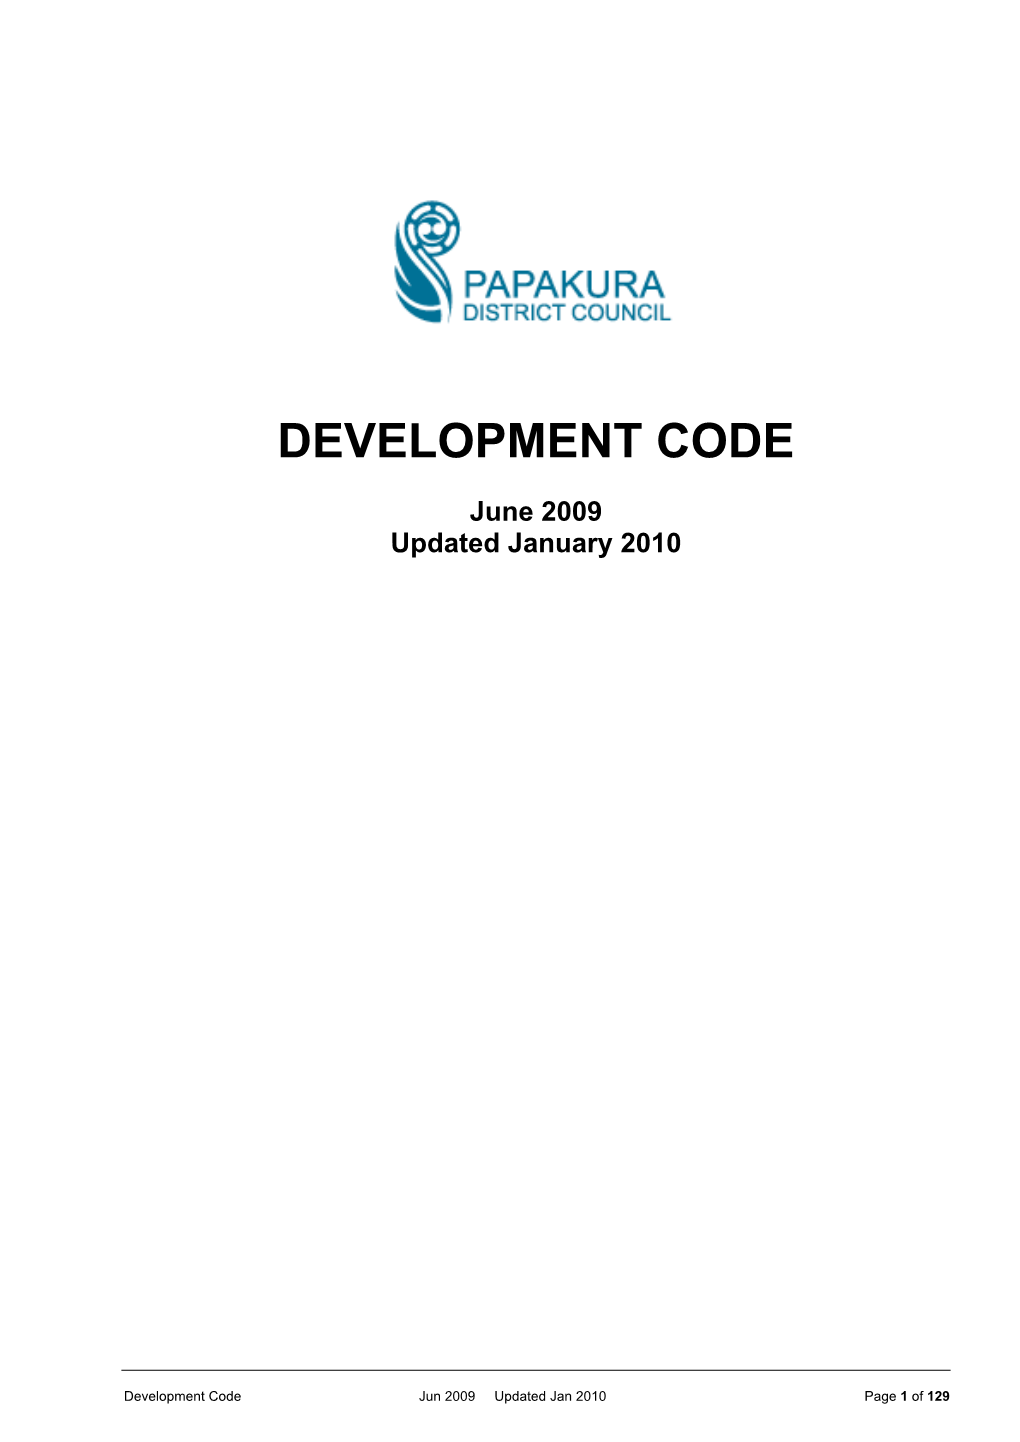 Papakura District Council Development Code Manual Part